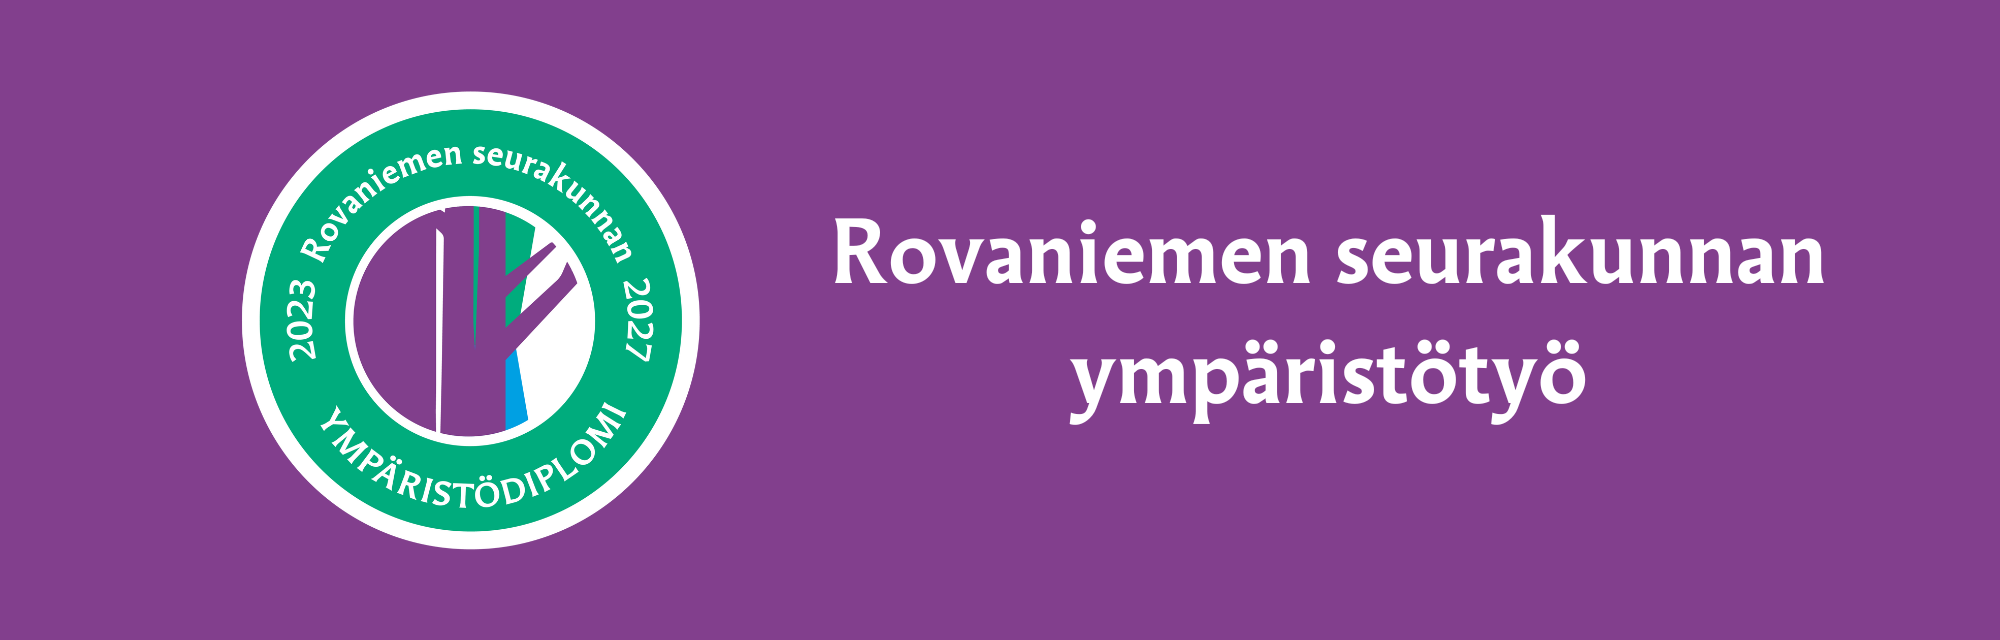 Rovaniemen seurakunnan ympäristödiplomin logo violetilla pohjalla.